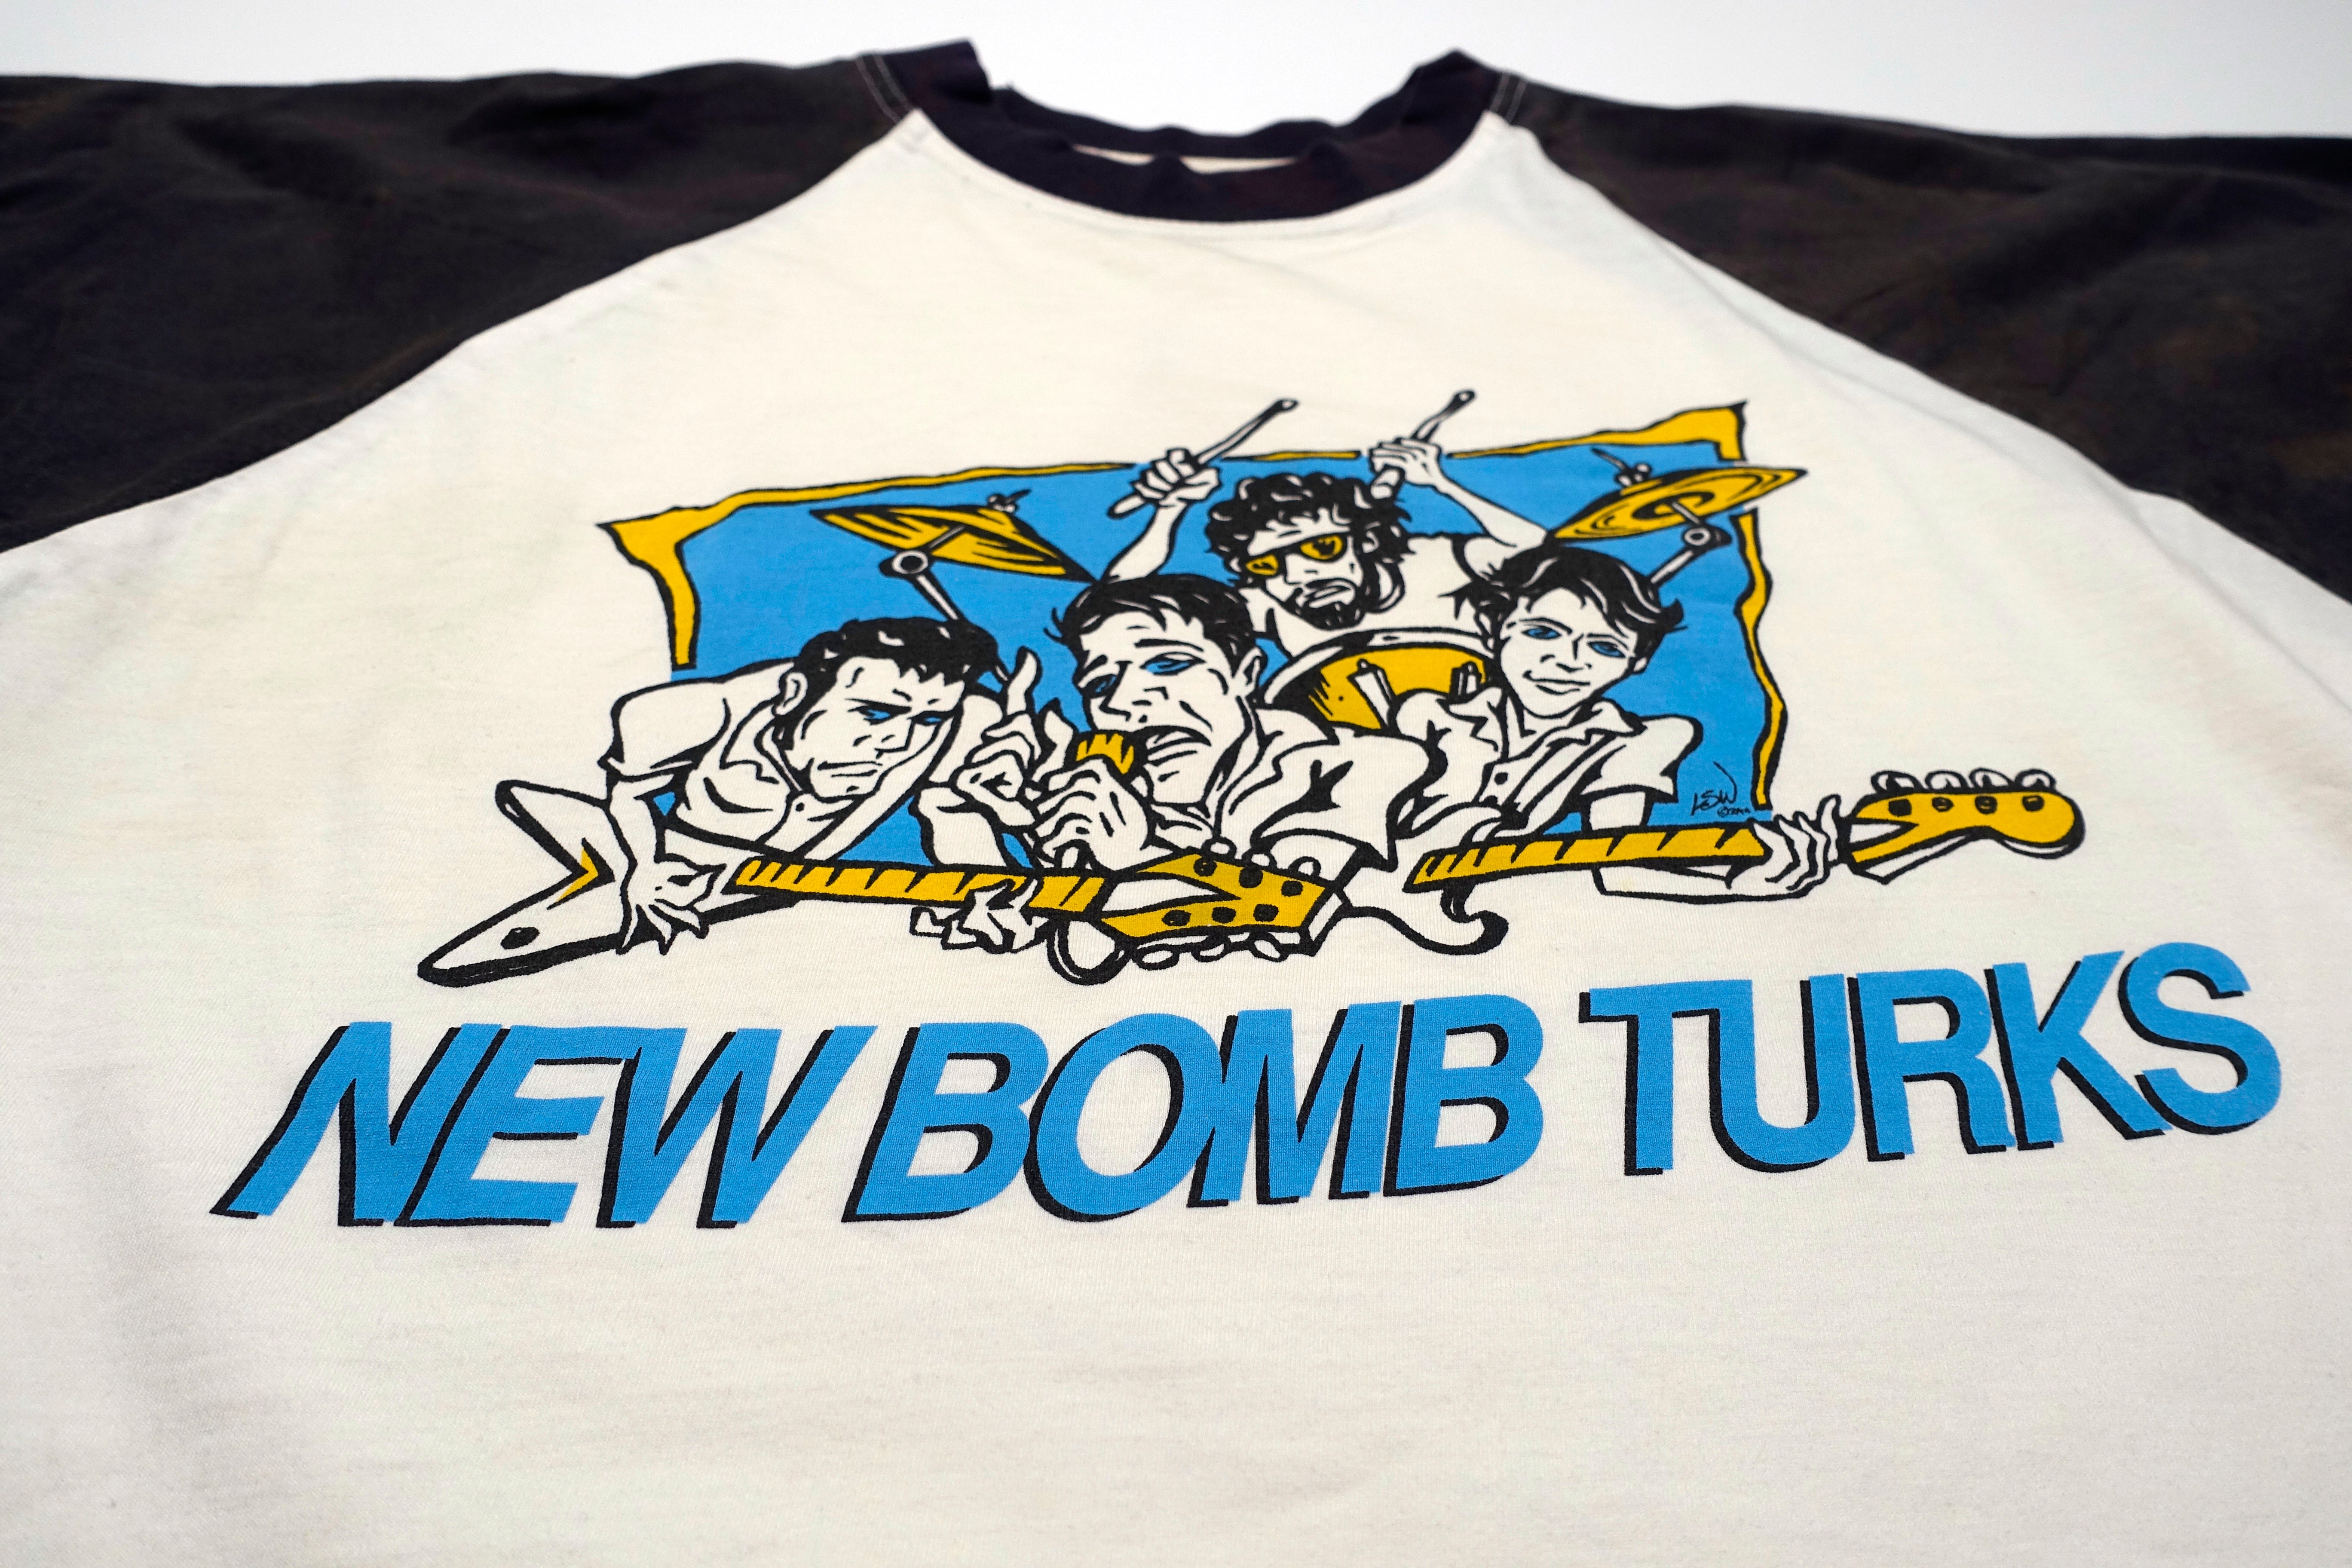 New Bomb Turks - Long Sleeve Tour Shirt Size Large